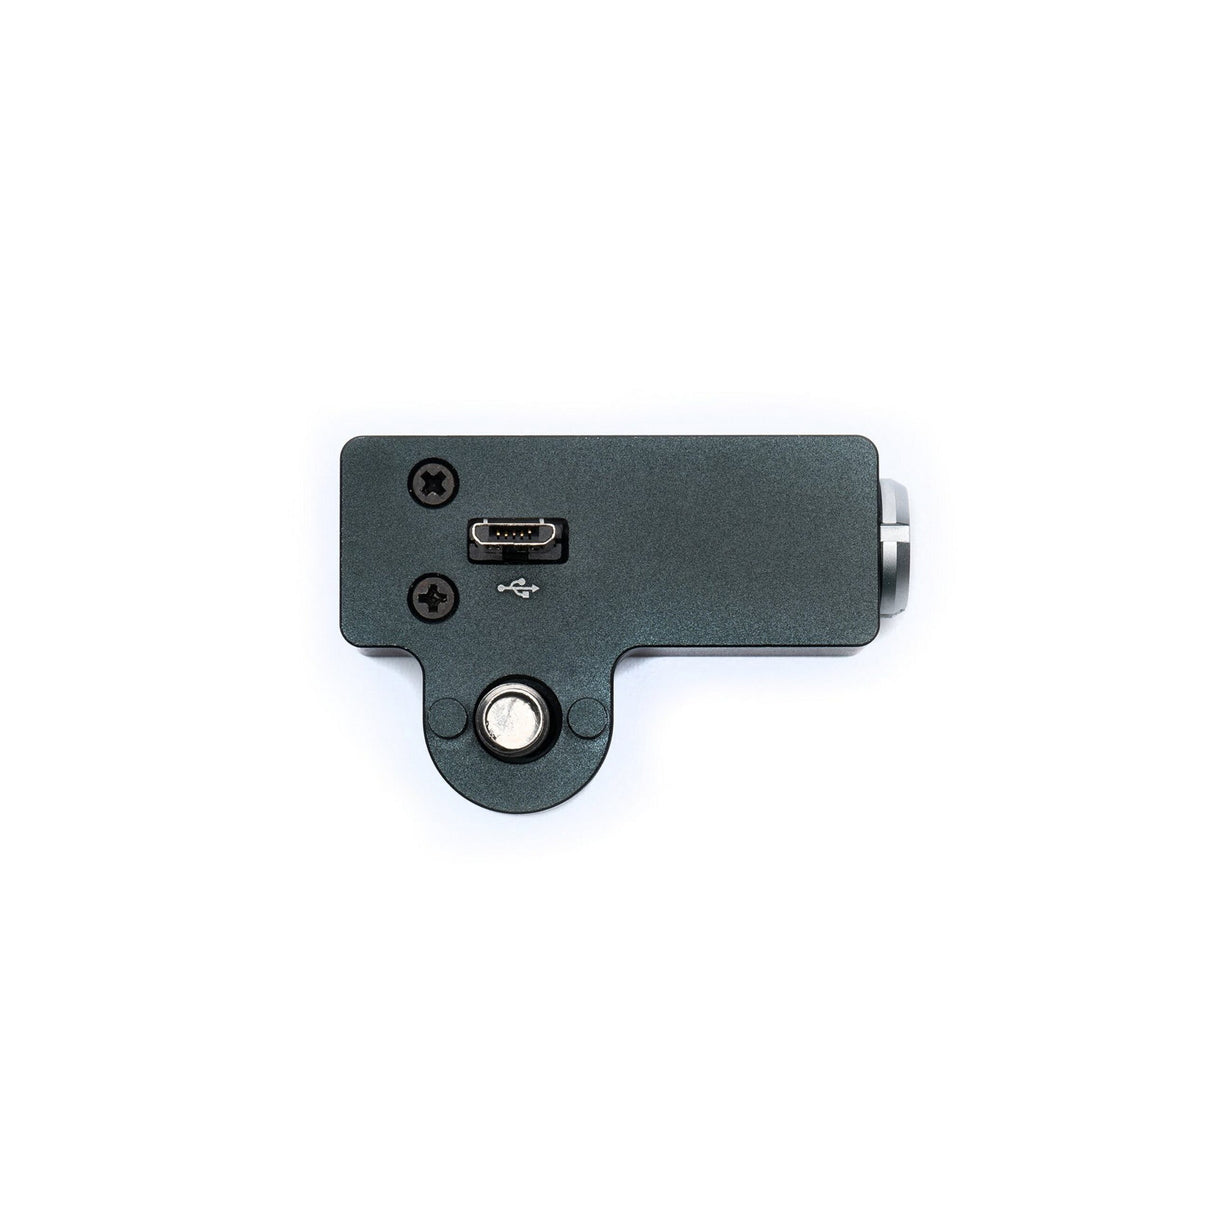 SmallHD Micro USB to 5-pin Lemo Adapter